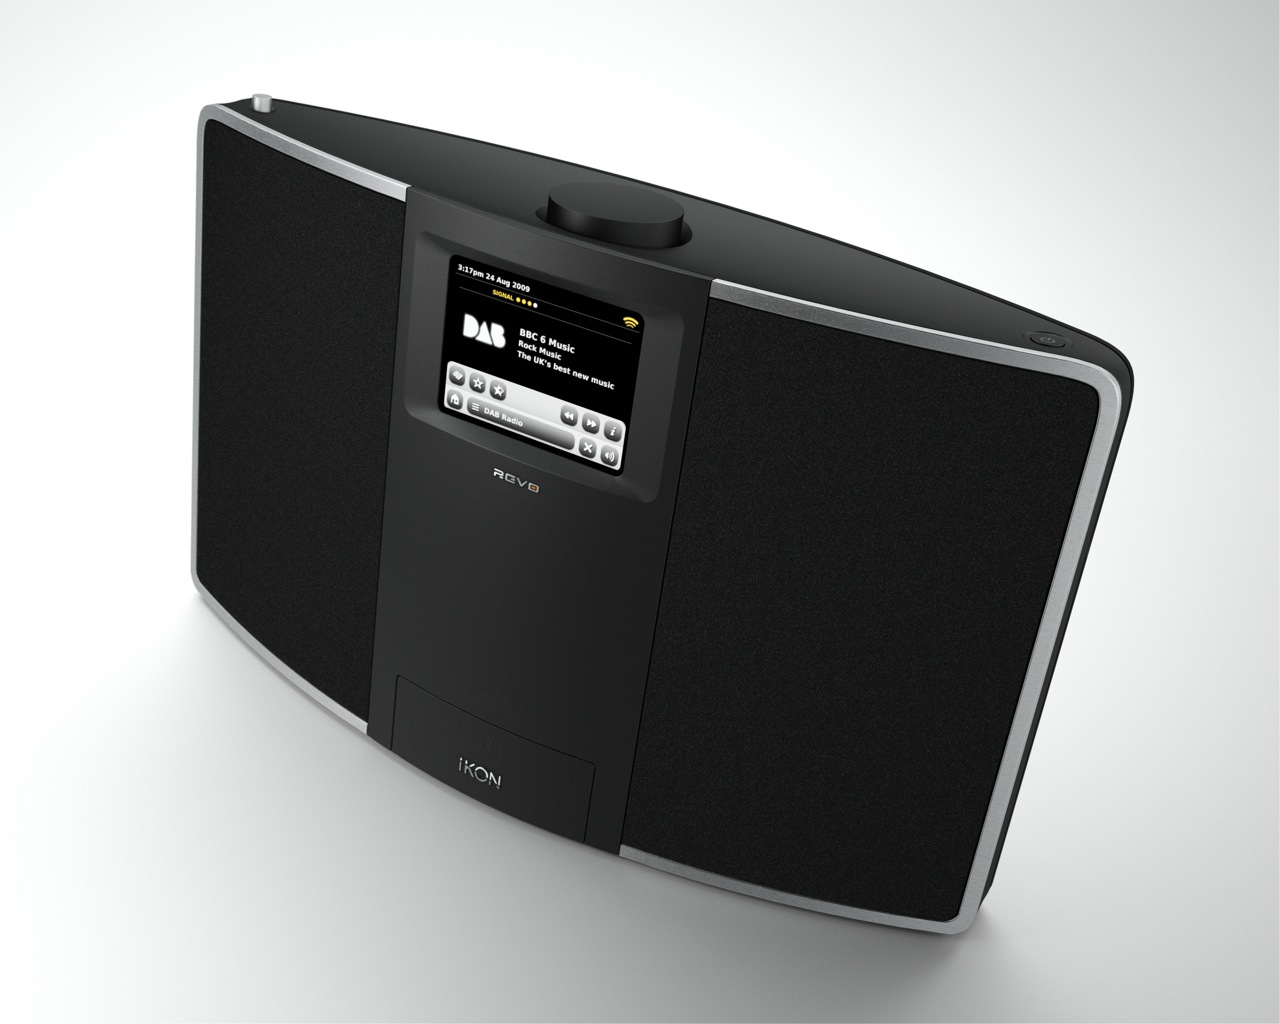 Aubergine Menselijk ras klap Revo IKON DAB, internet radio & iPod dock with 3.5-inch touchscreen & WiFi  - SlashGear